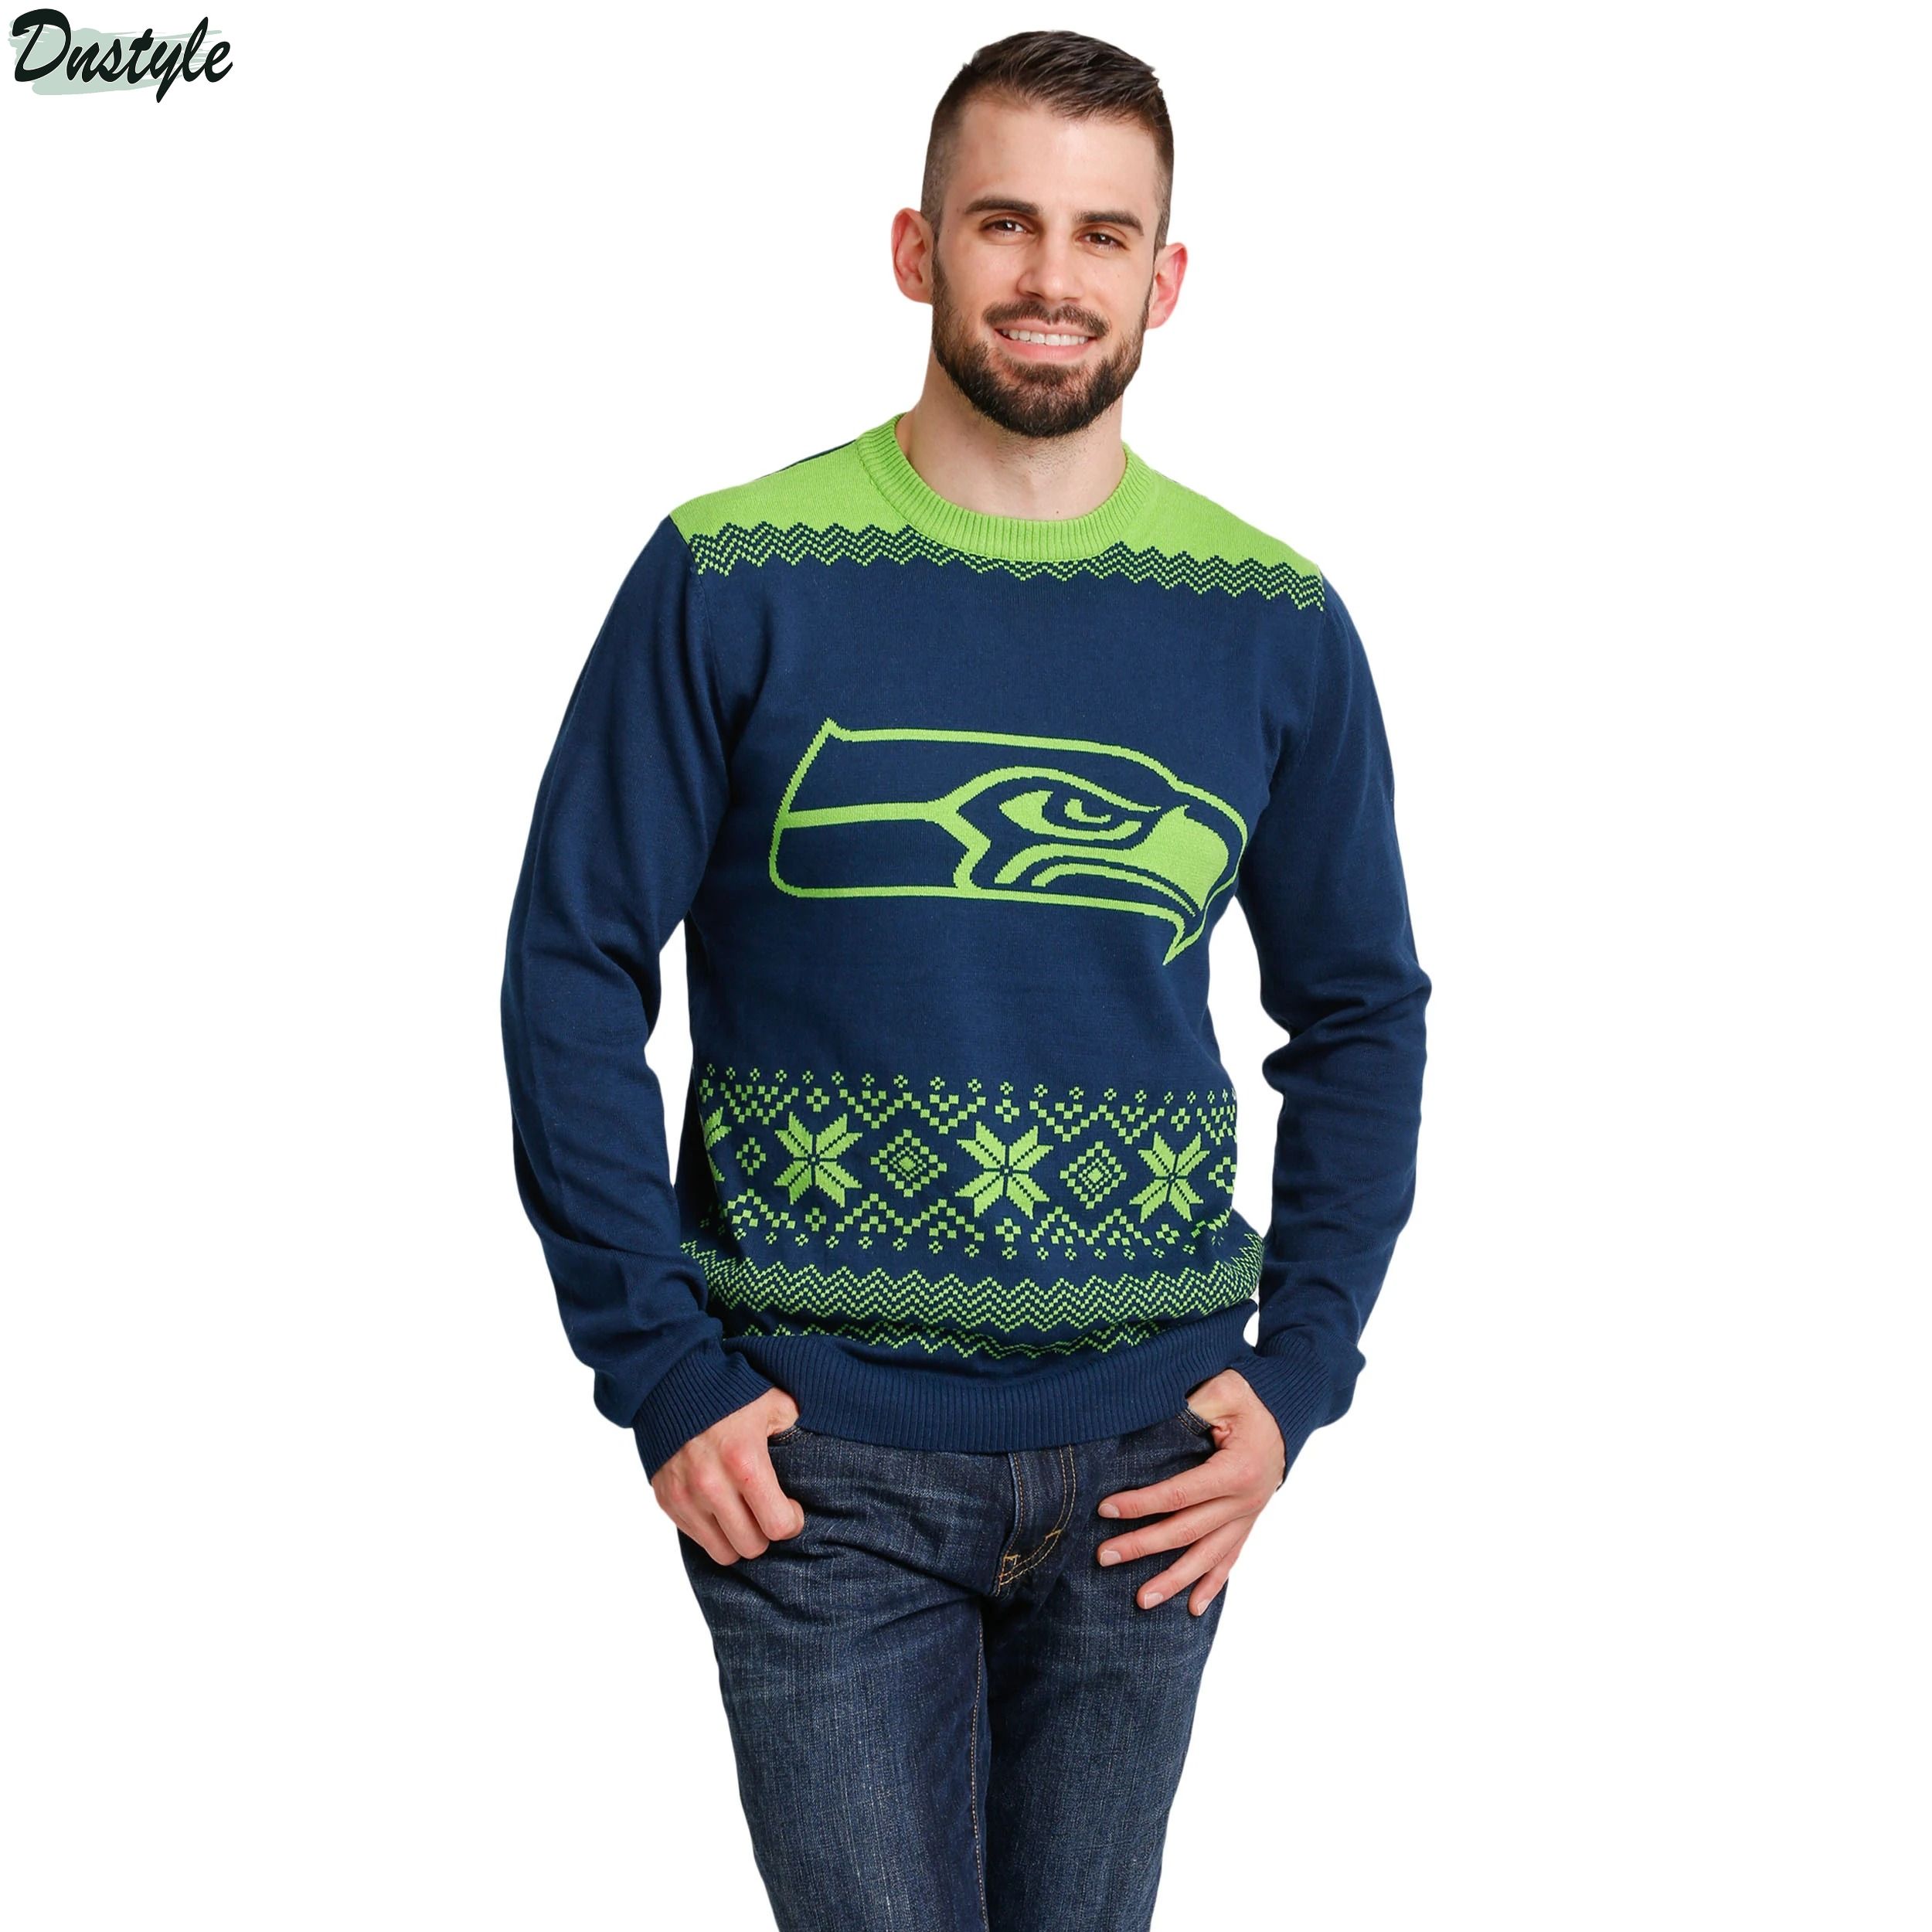 Seattle seahawk NFL ugly sweater